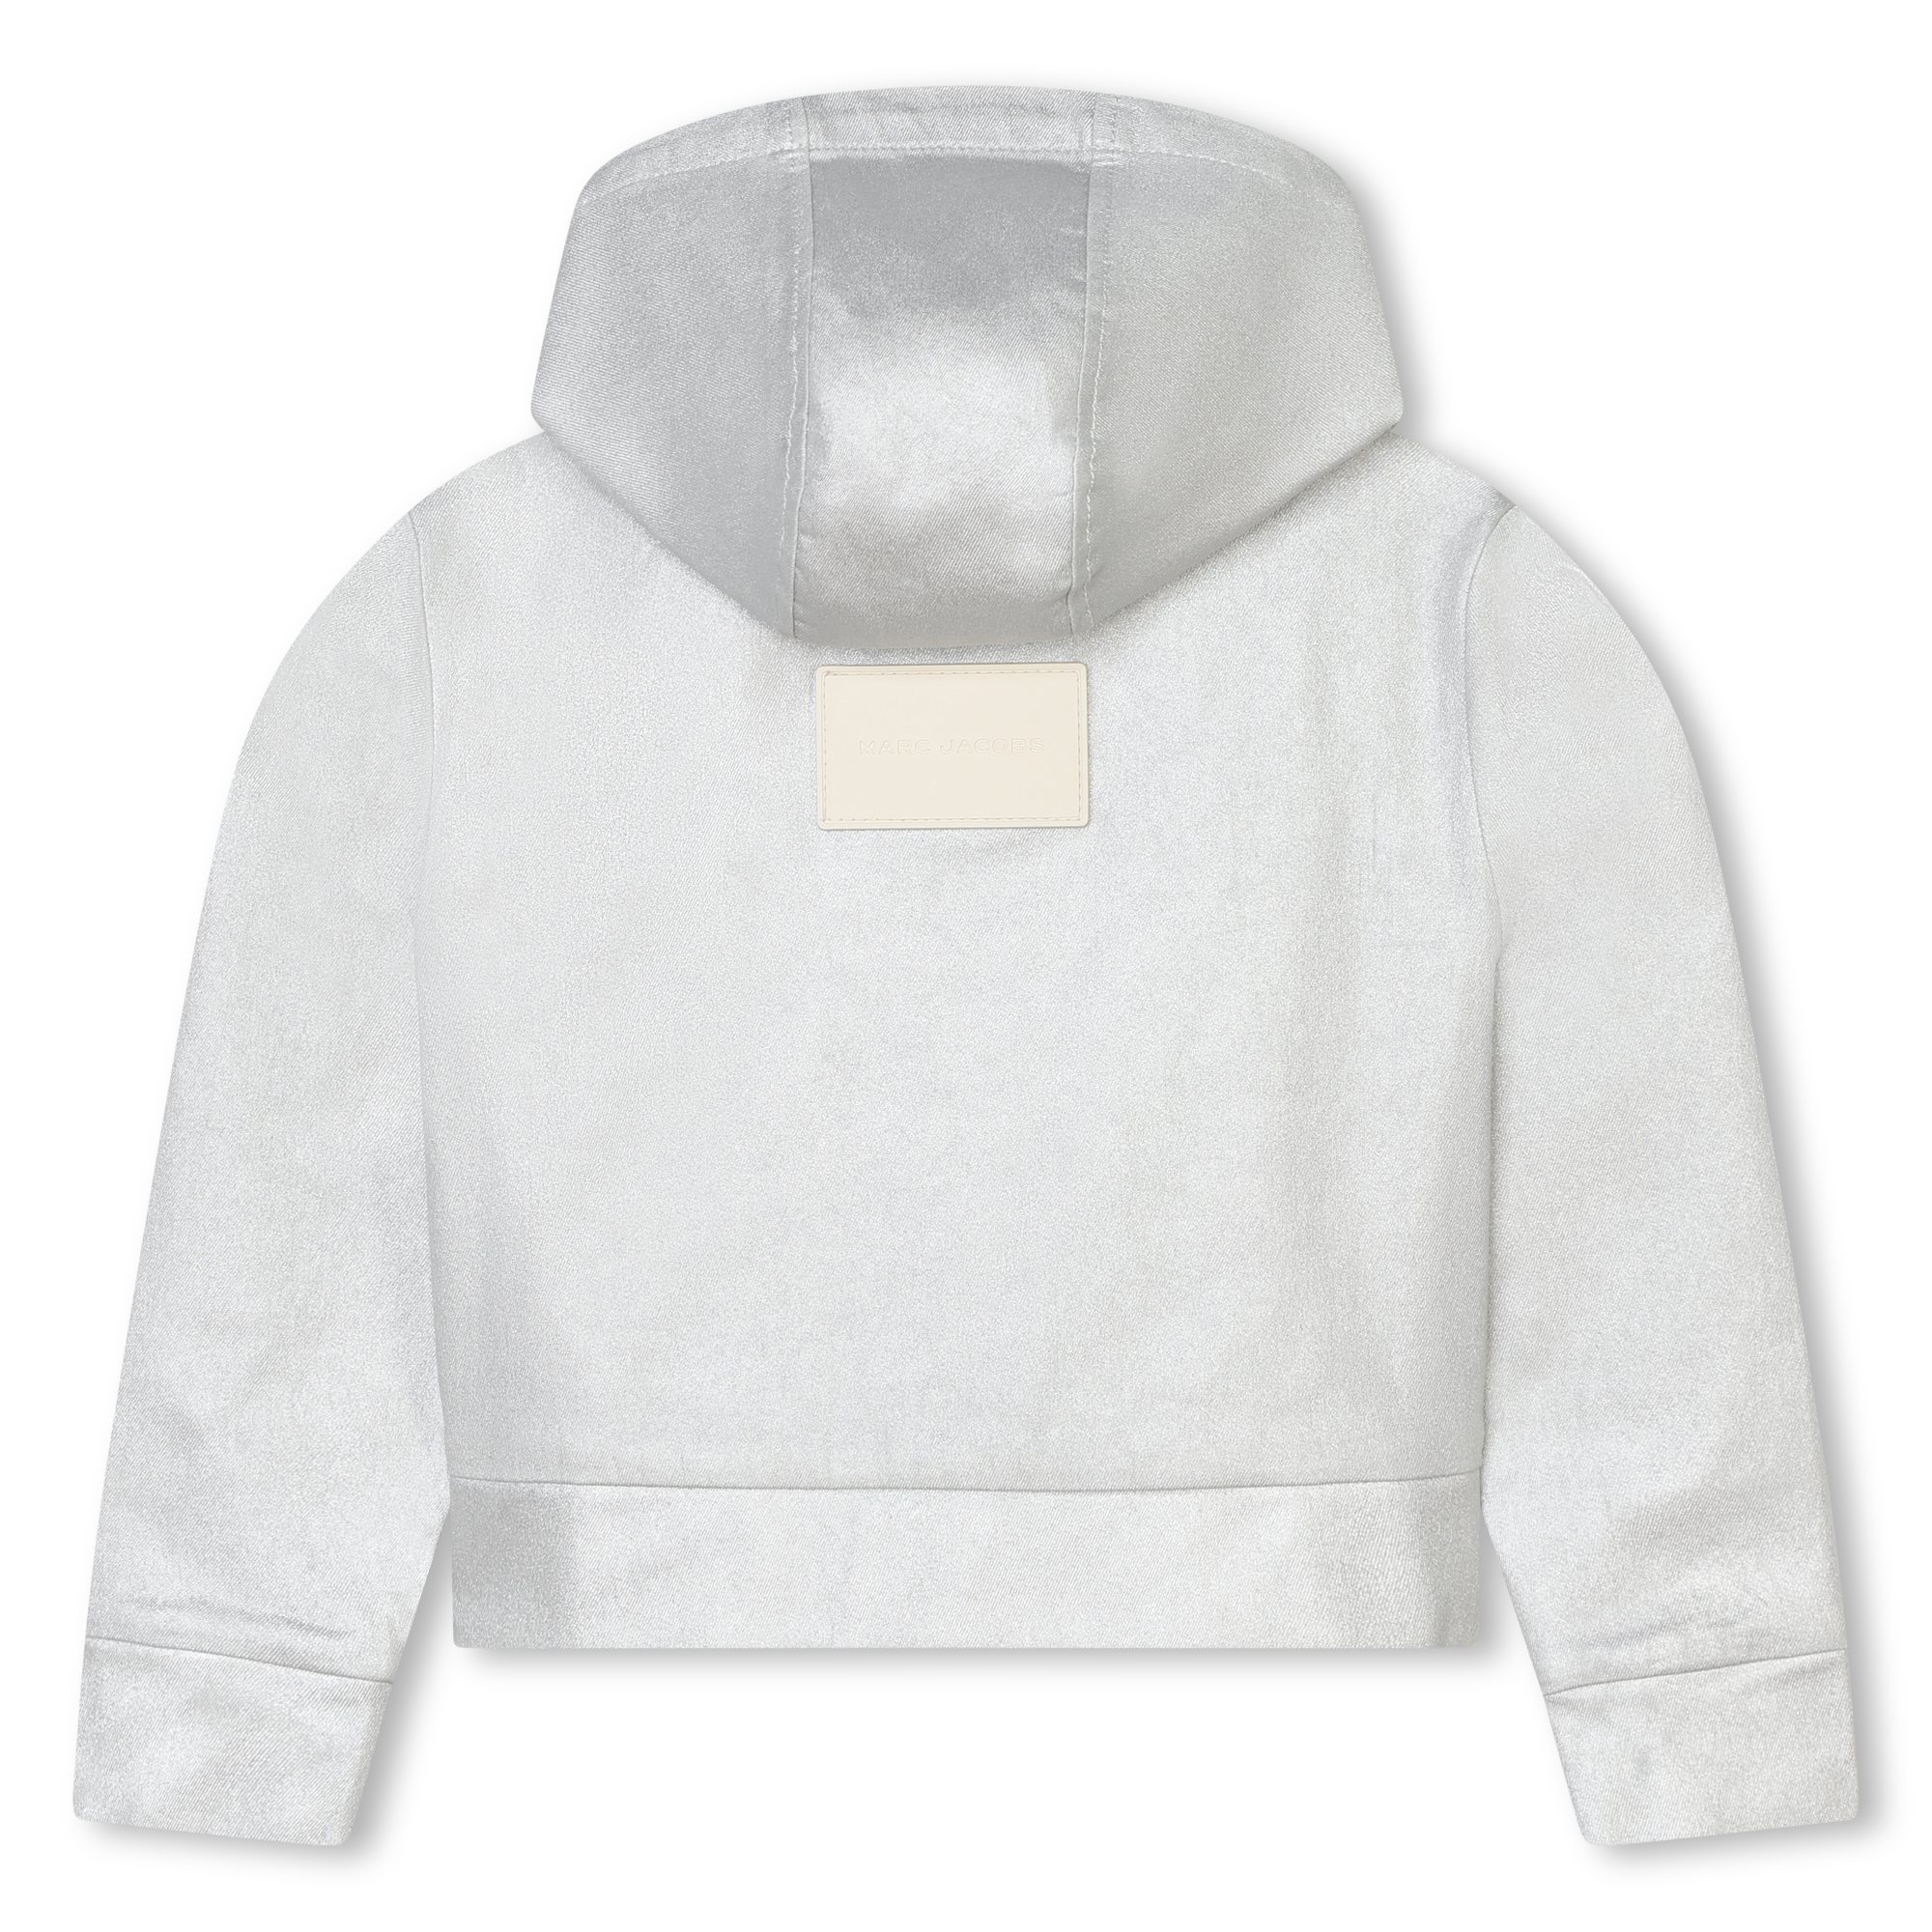 Cropped zip-up sweatshirt MARC JACOBS for GIRL